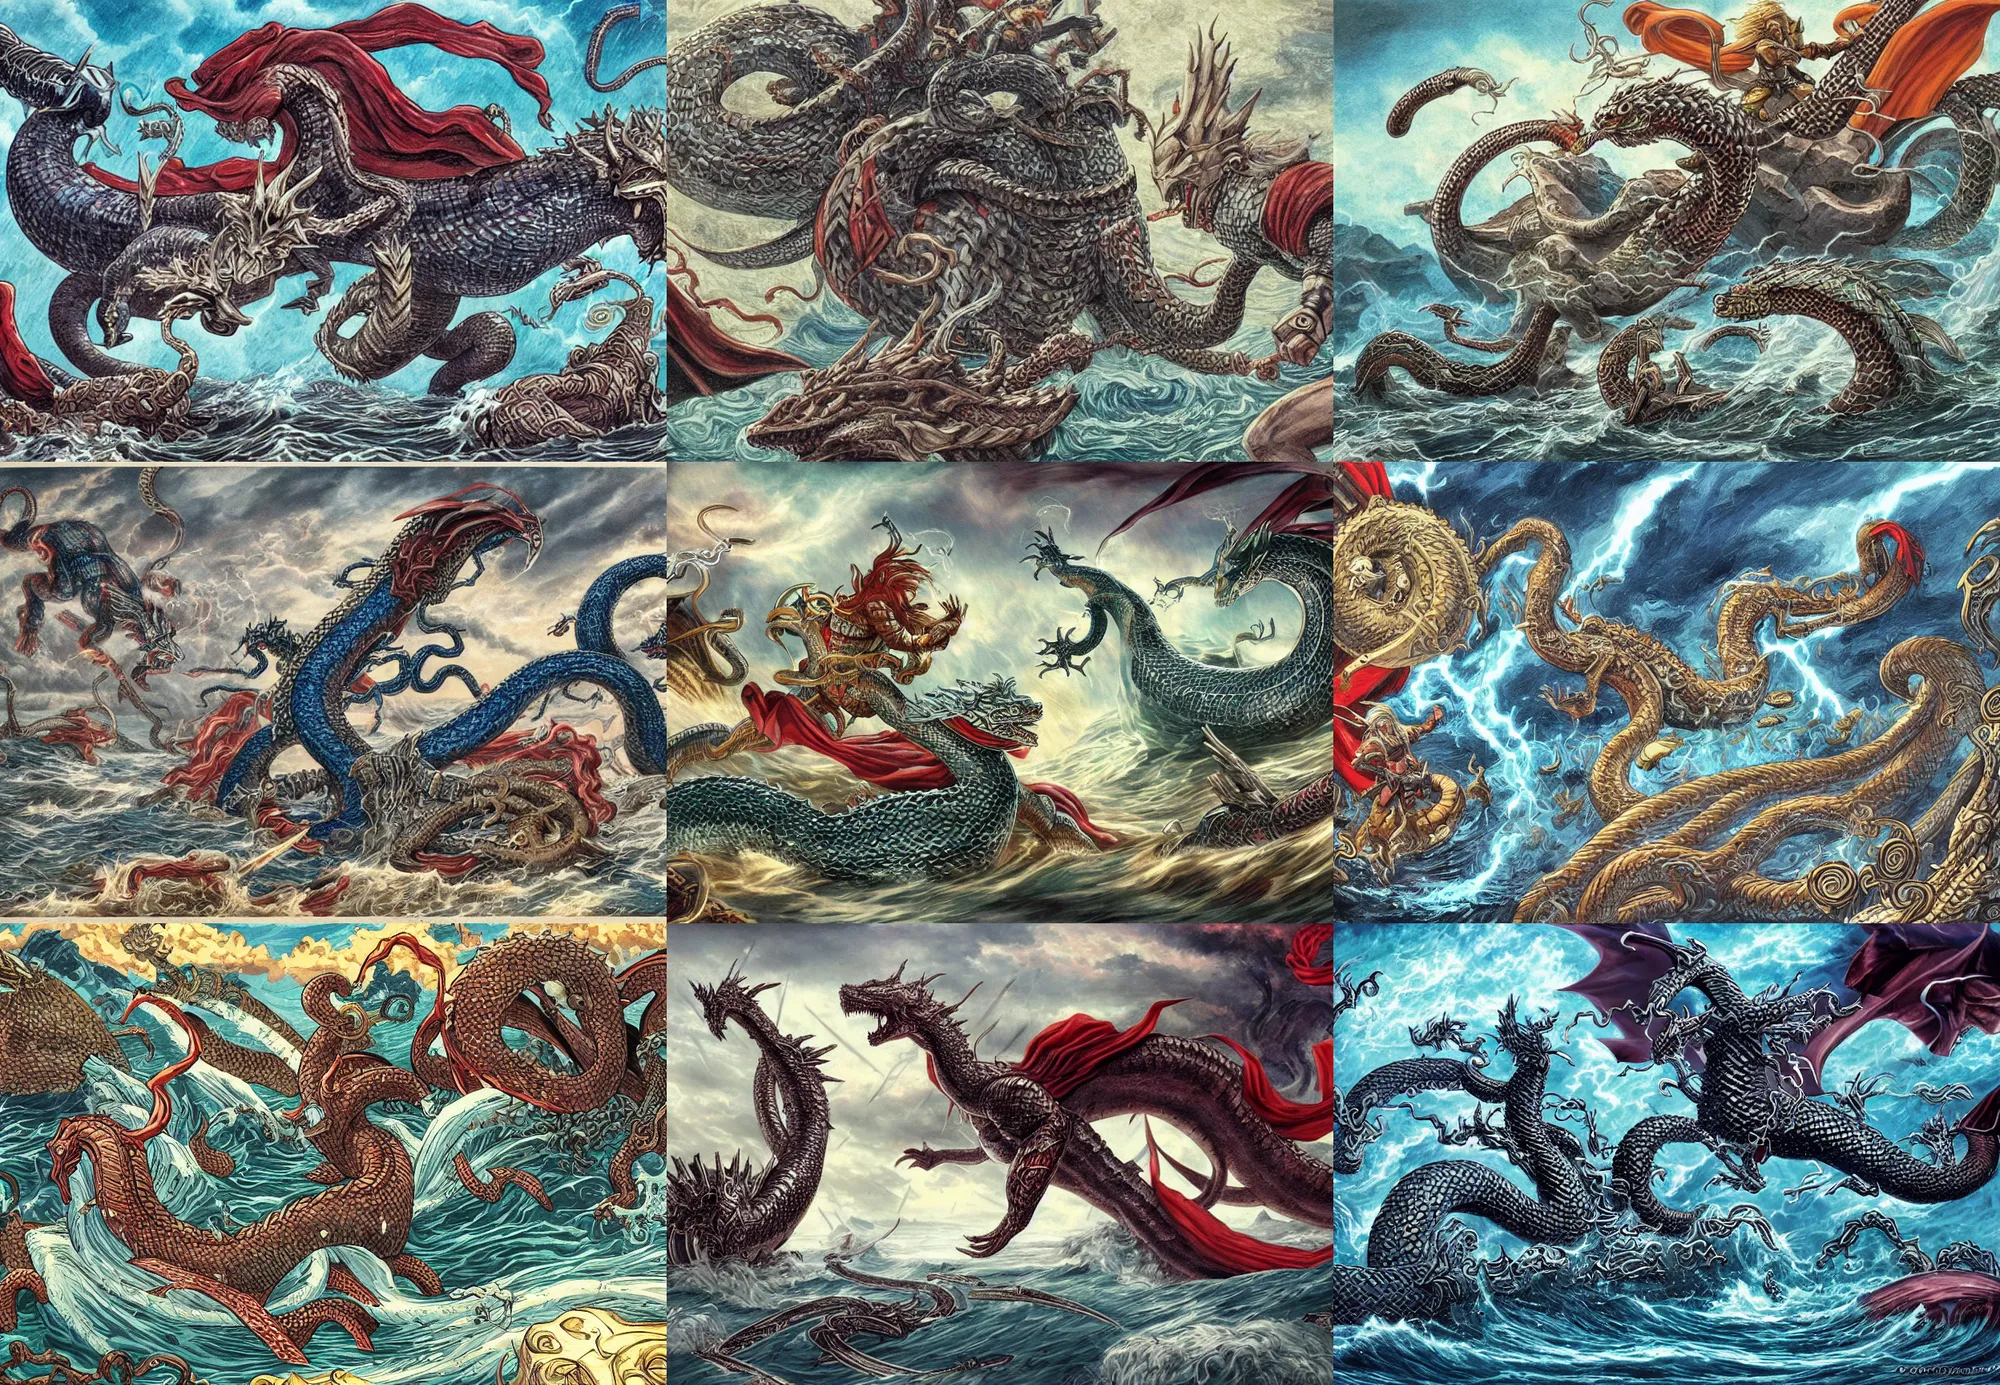 Prompt: thor god of thunder versus sea serpent chaos dragon jormungandr, during battle of ragnarok, detailed artwork